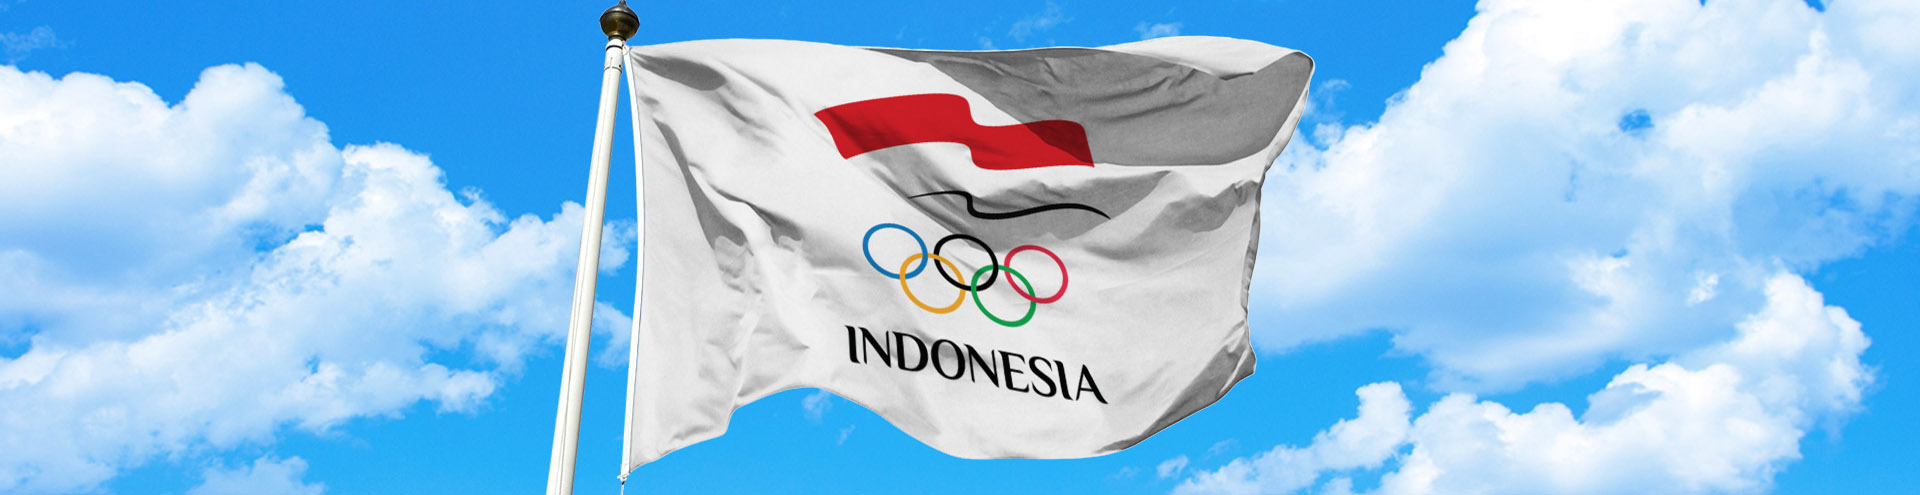 Raja Sapta Oktohari Elected as Indonesian Olympic Committee President - Indonesia Olympic Commitee